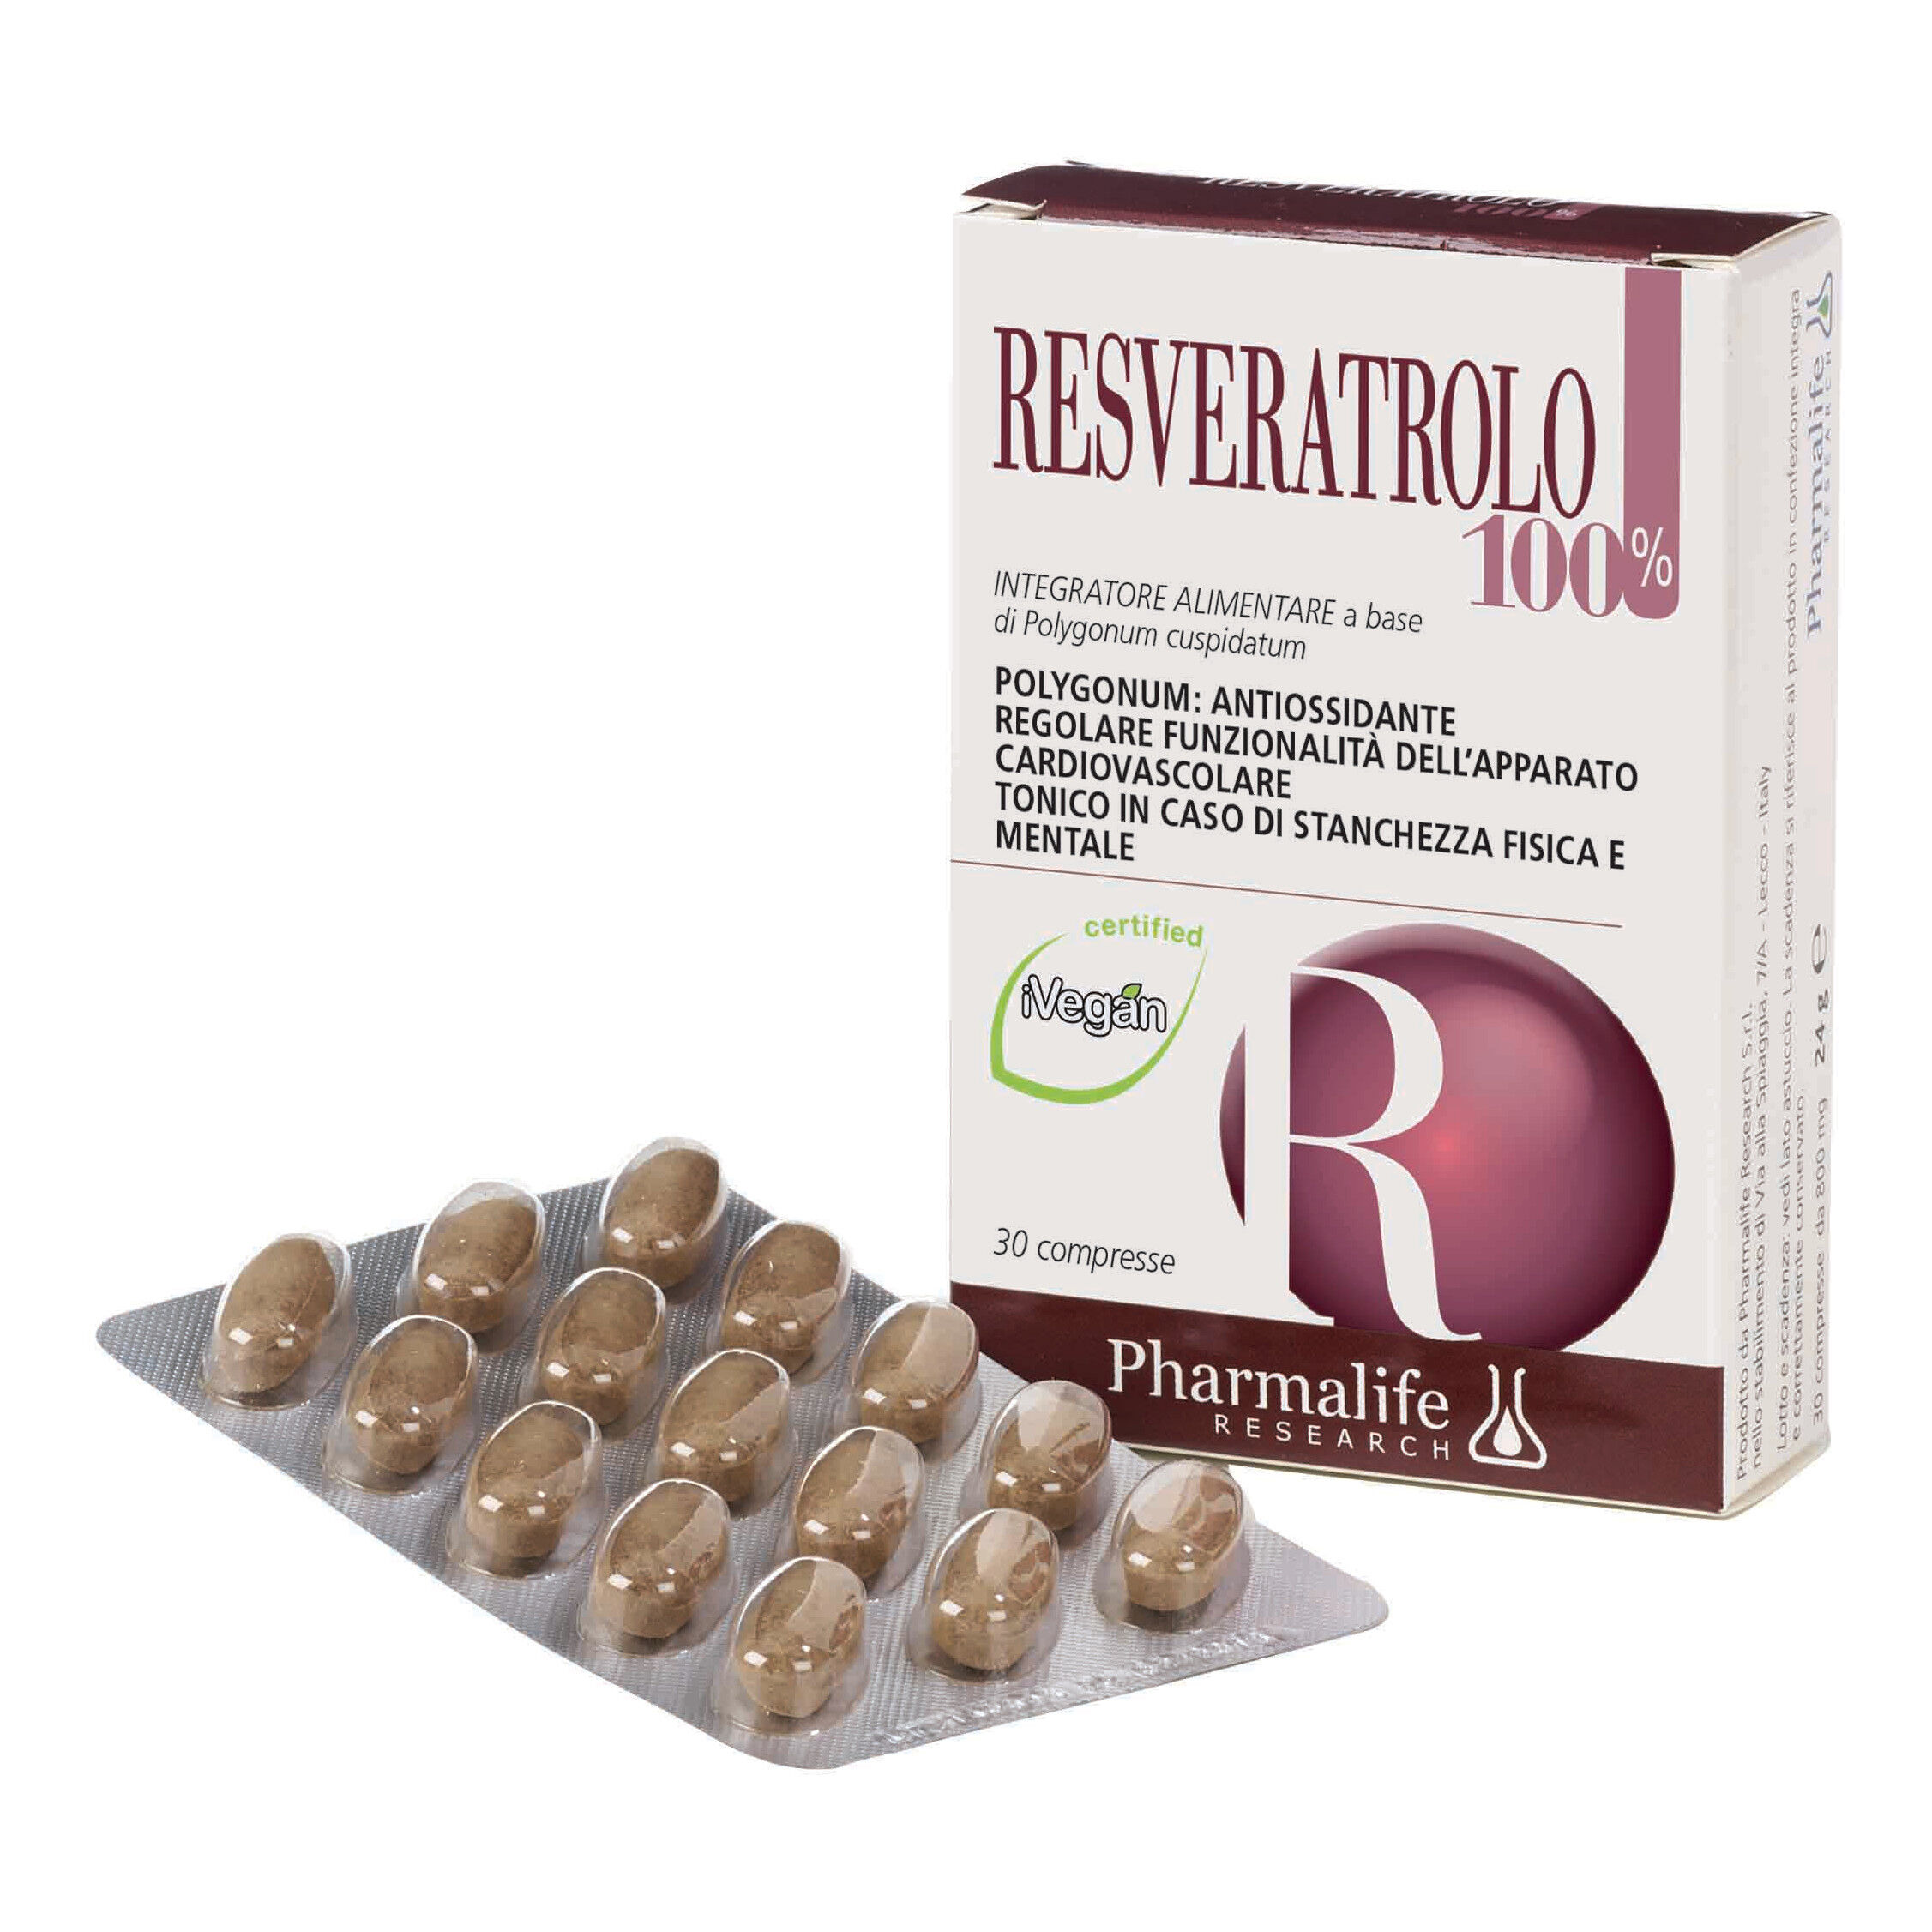 PHARMALIFE RESEARCH Srl Resveratrolo 100% 30 cpr prh